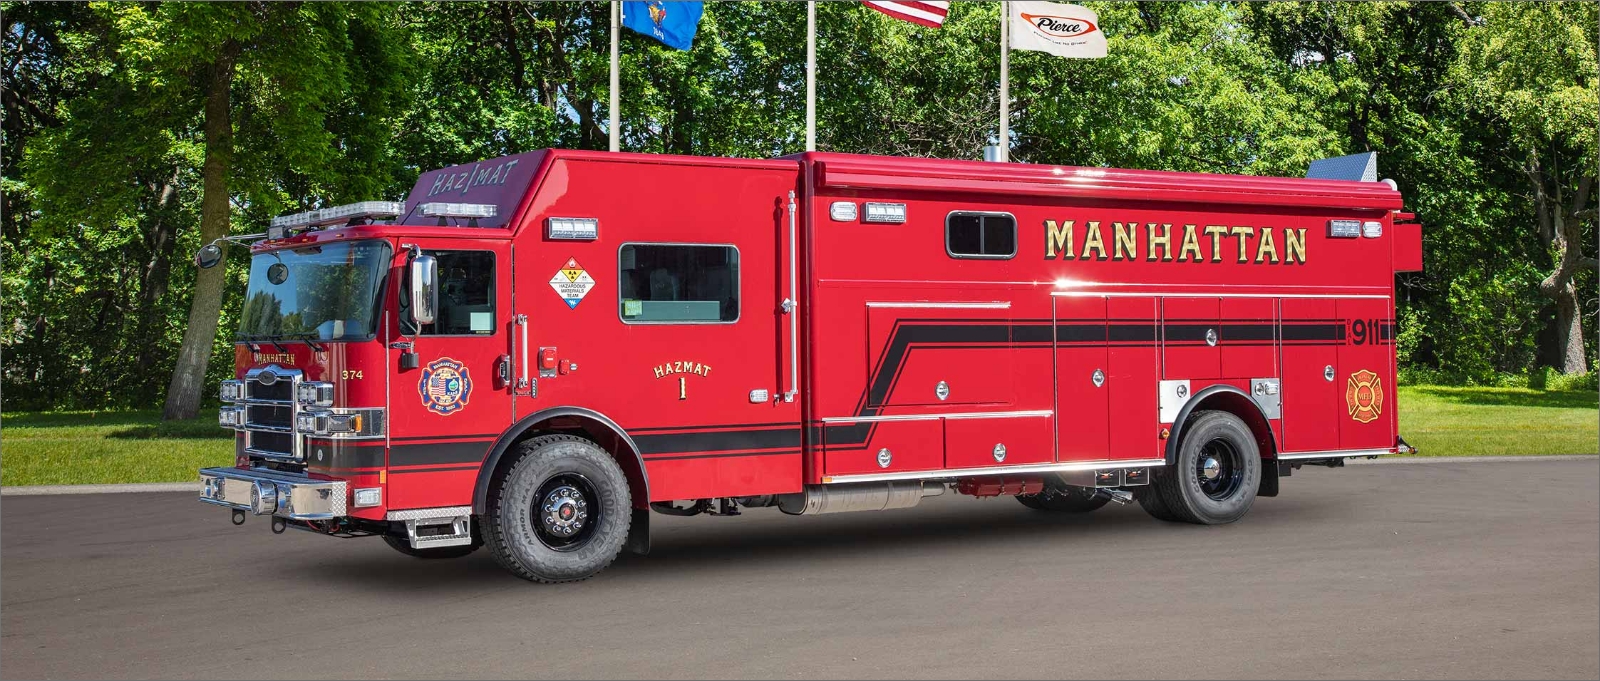 Manhattan-fire-department-combination-rescue-fire-truck